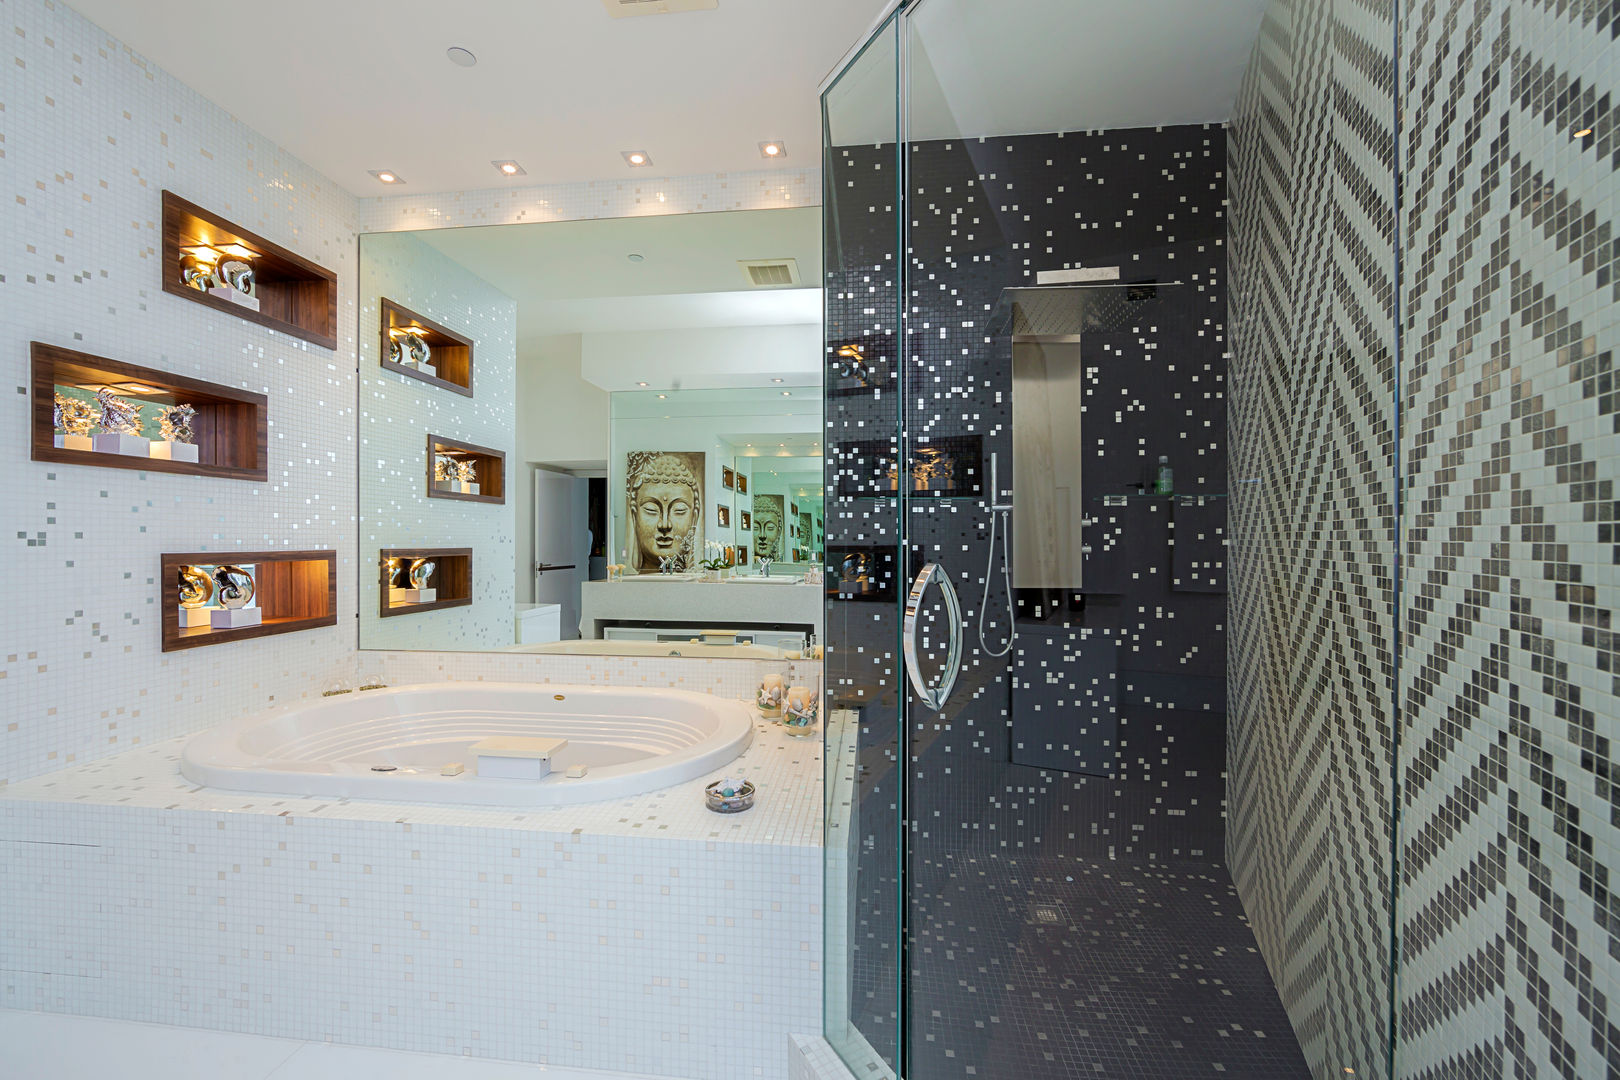 Sunny Isles - Florida - US, Infinity Spaces Infinity Spaces Modern Bathroom